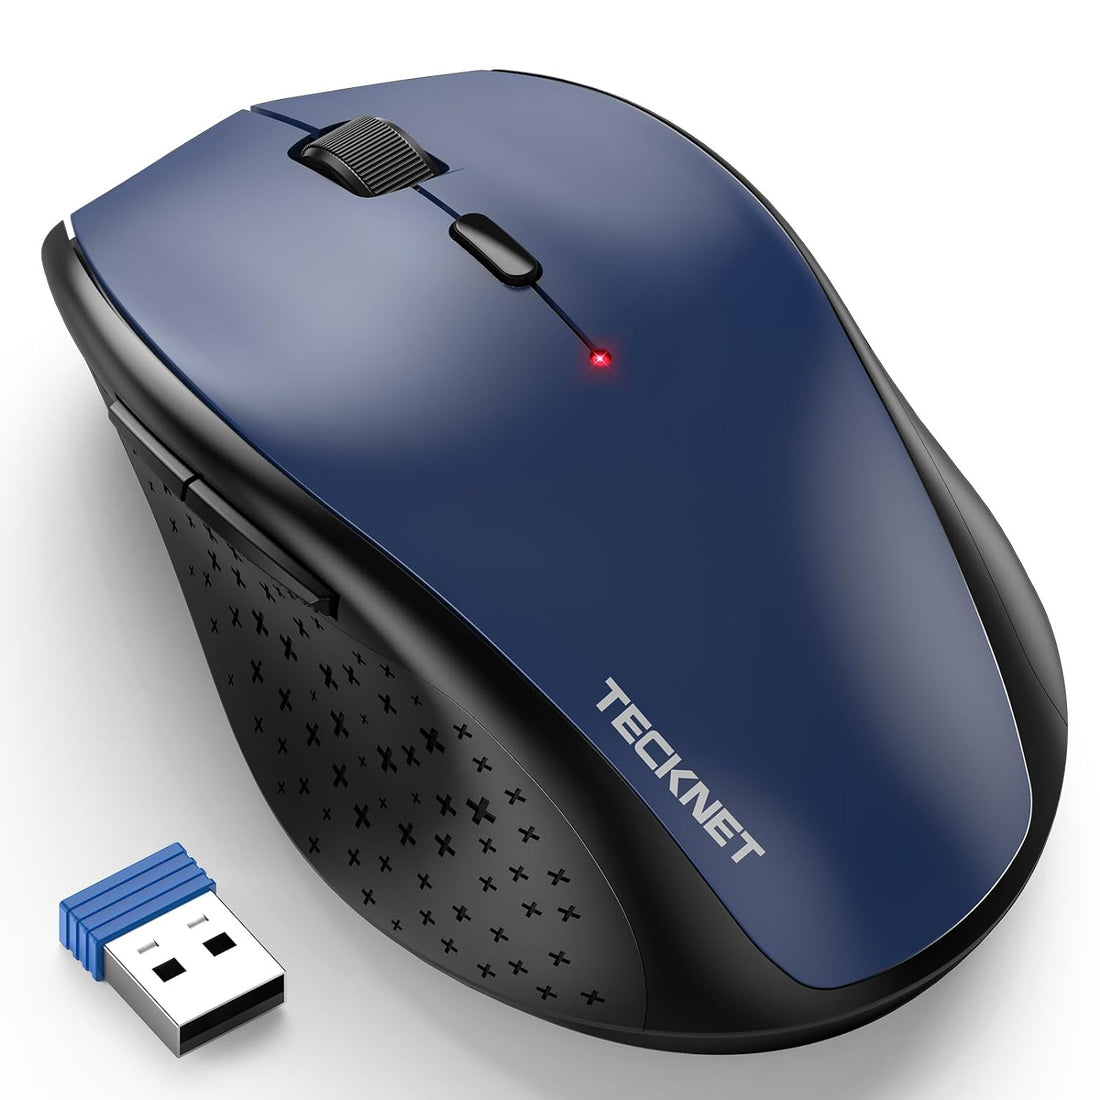 Tecknet® M002 2.4G Nano Cordless Optical Mouse - 18 Month Battery Life - Battery Level Indicator - 2.4 GHz -3 Adjustable DPI Levels: 2000/1500/1000dPi - Nano USB Wireless Receiver - Blue